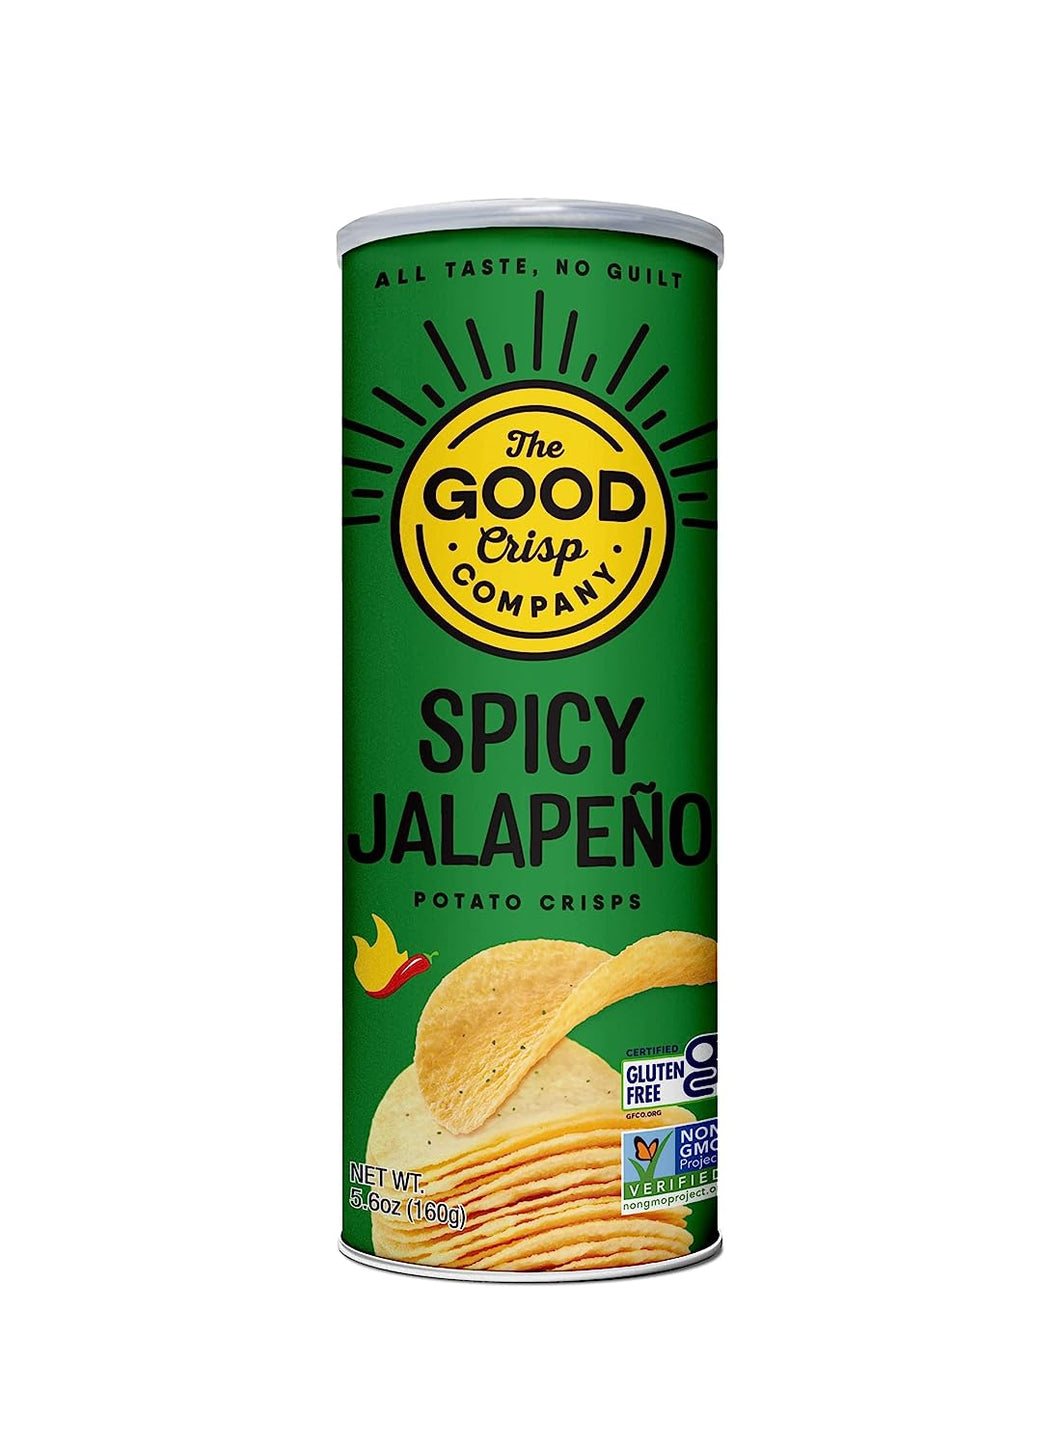 The Good Crisp Co. Spicy Jalapeno